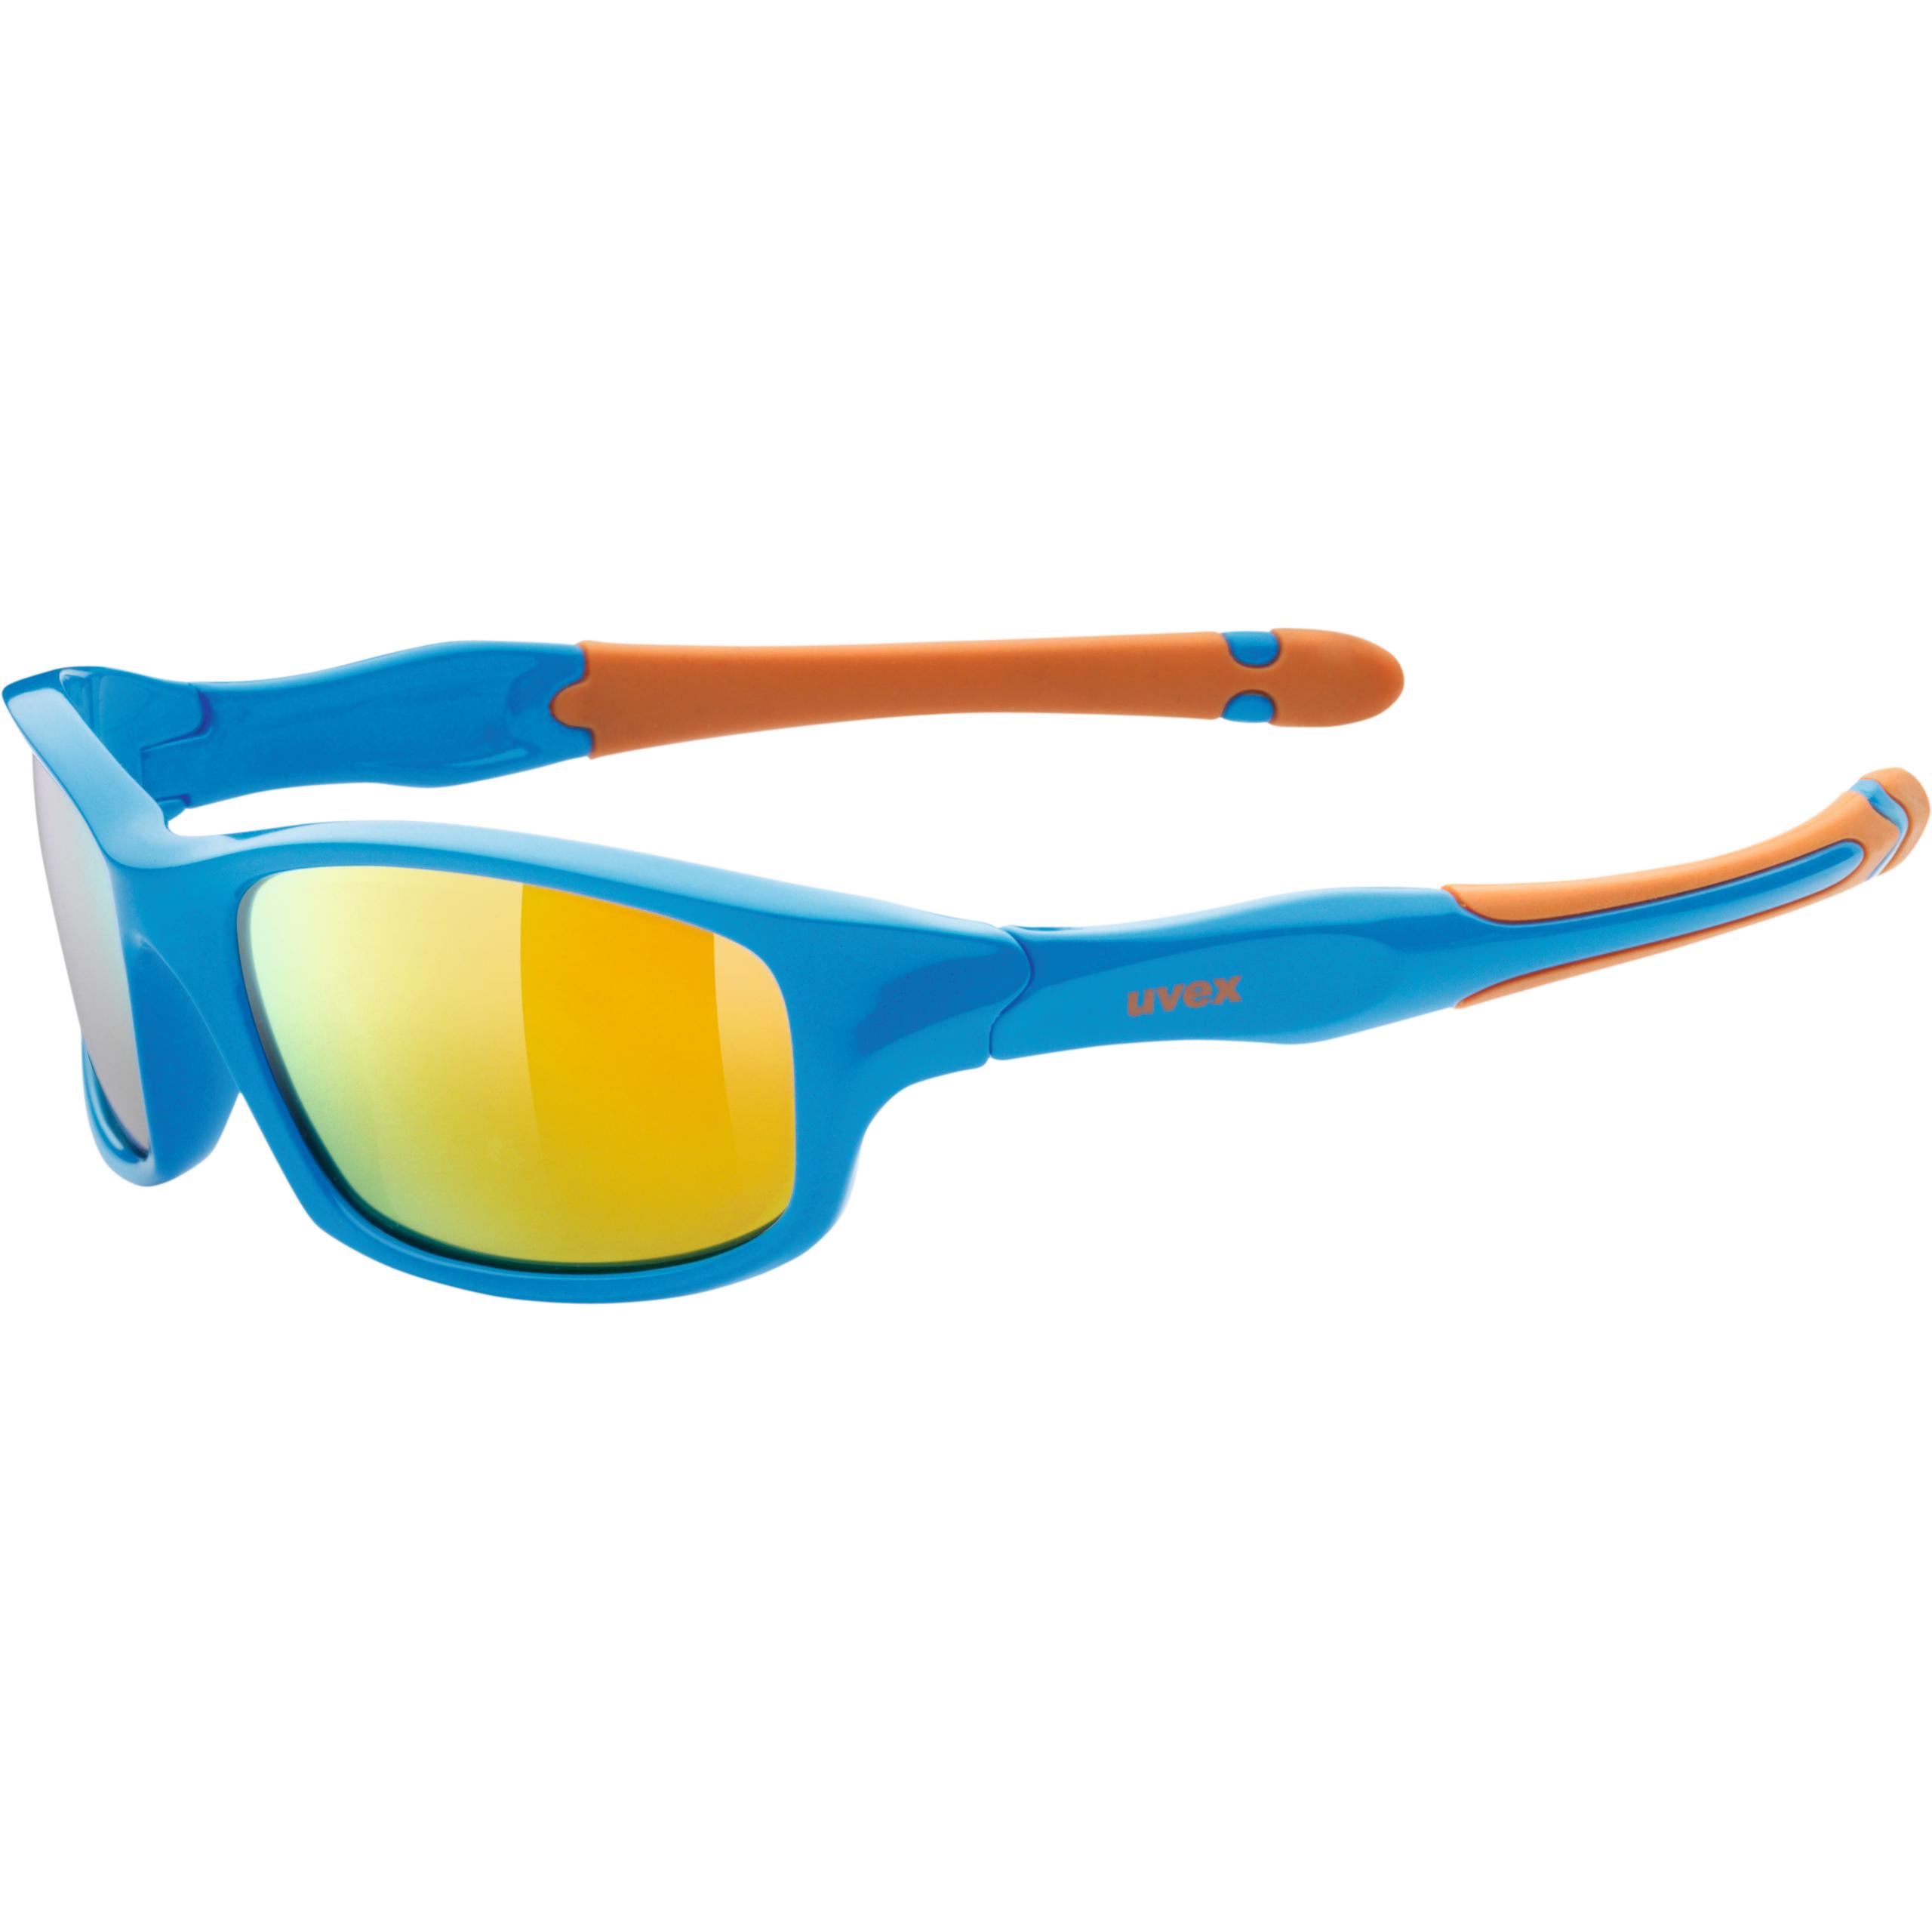 Kinder-Sonnenbrille sportstyle 507, blue orange